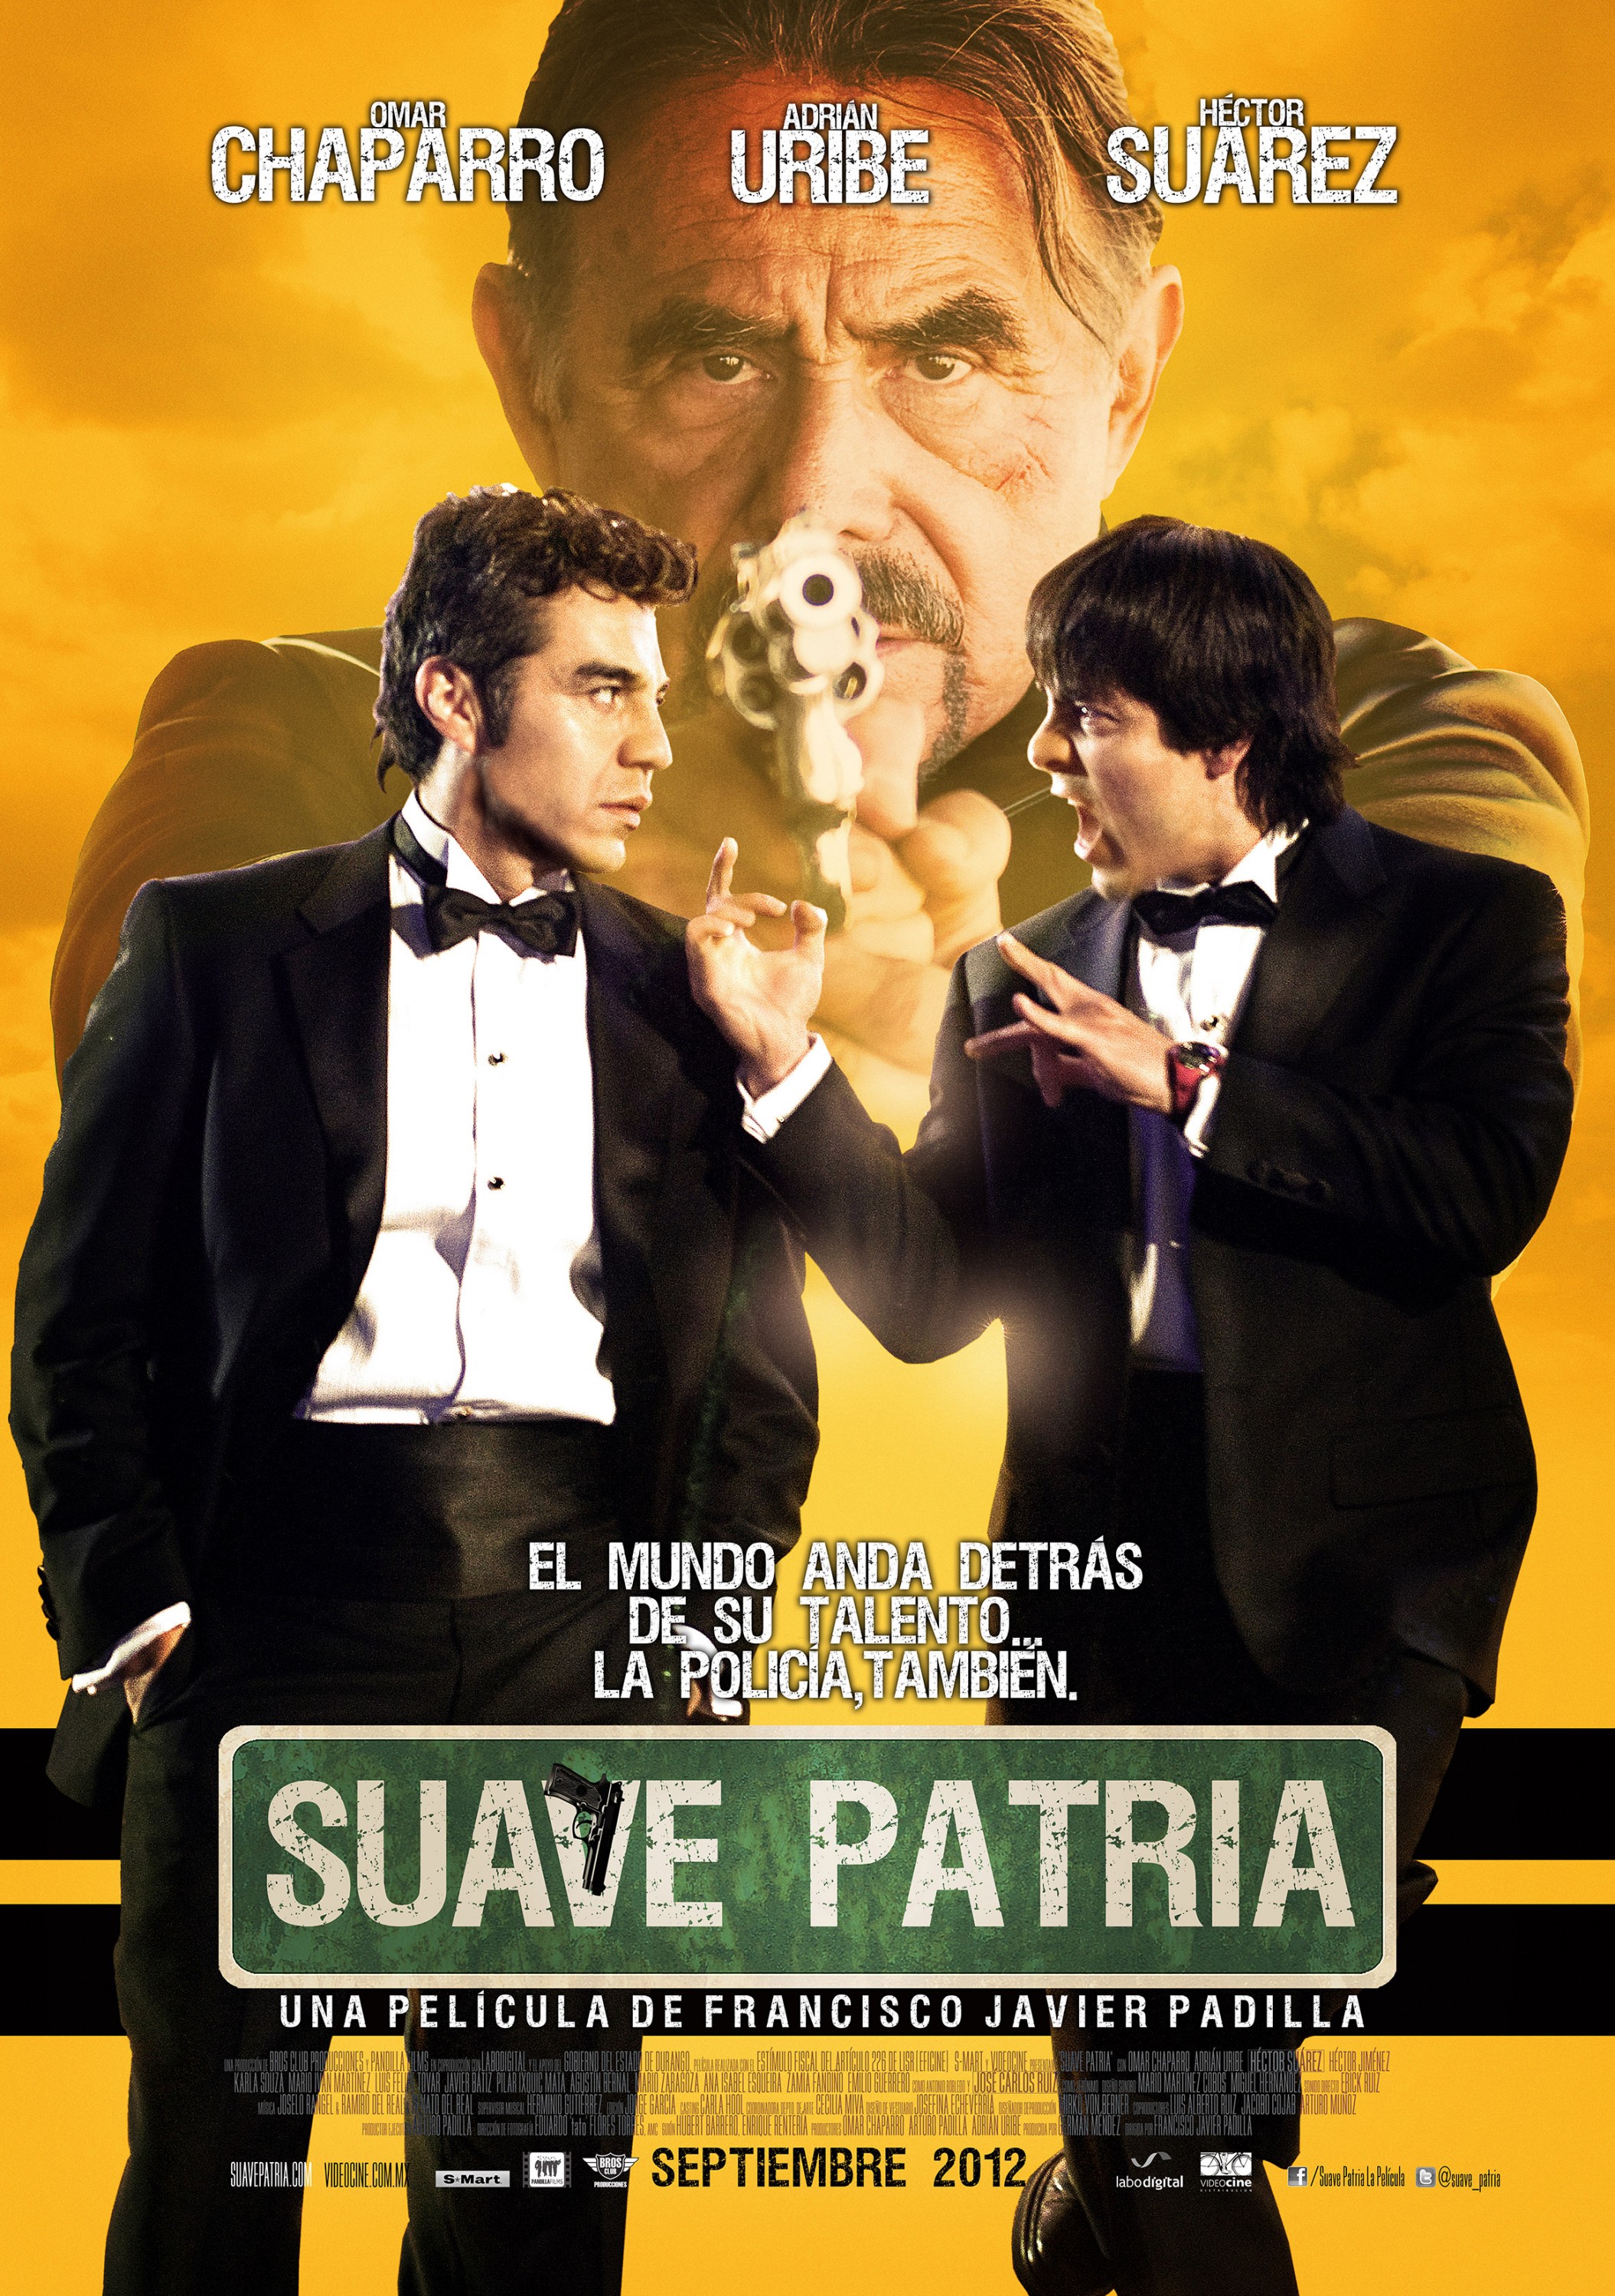 Mega Sized Movie Poster Image for Suave patria 